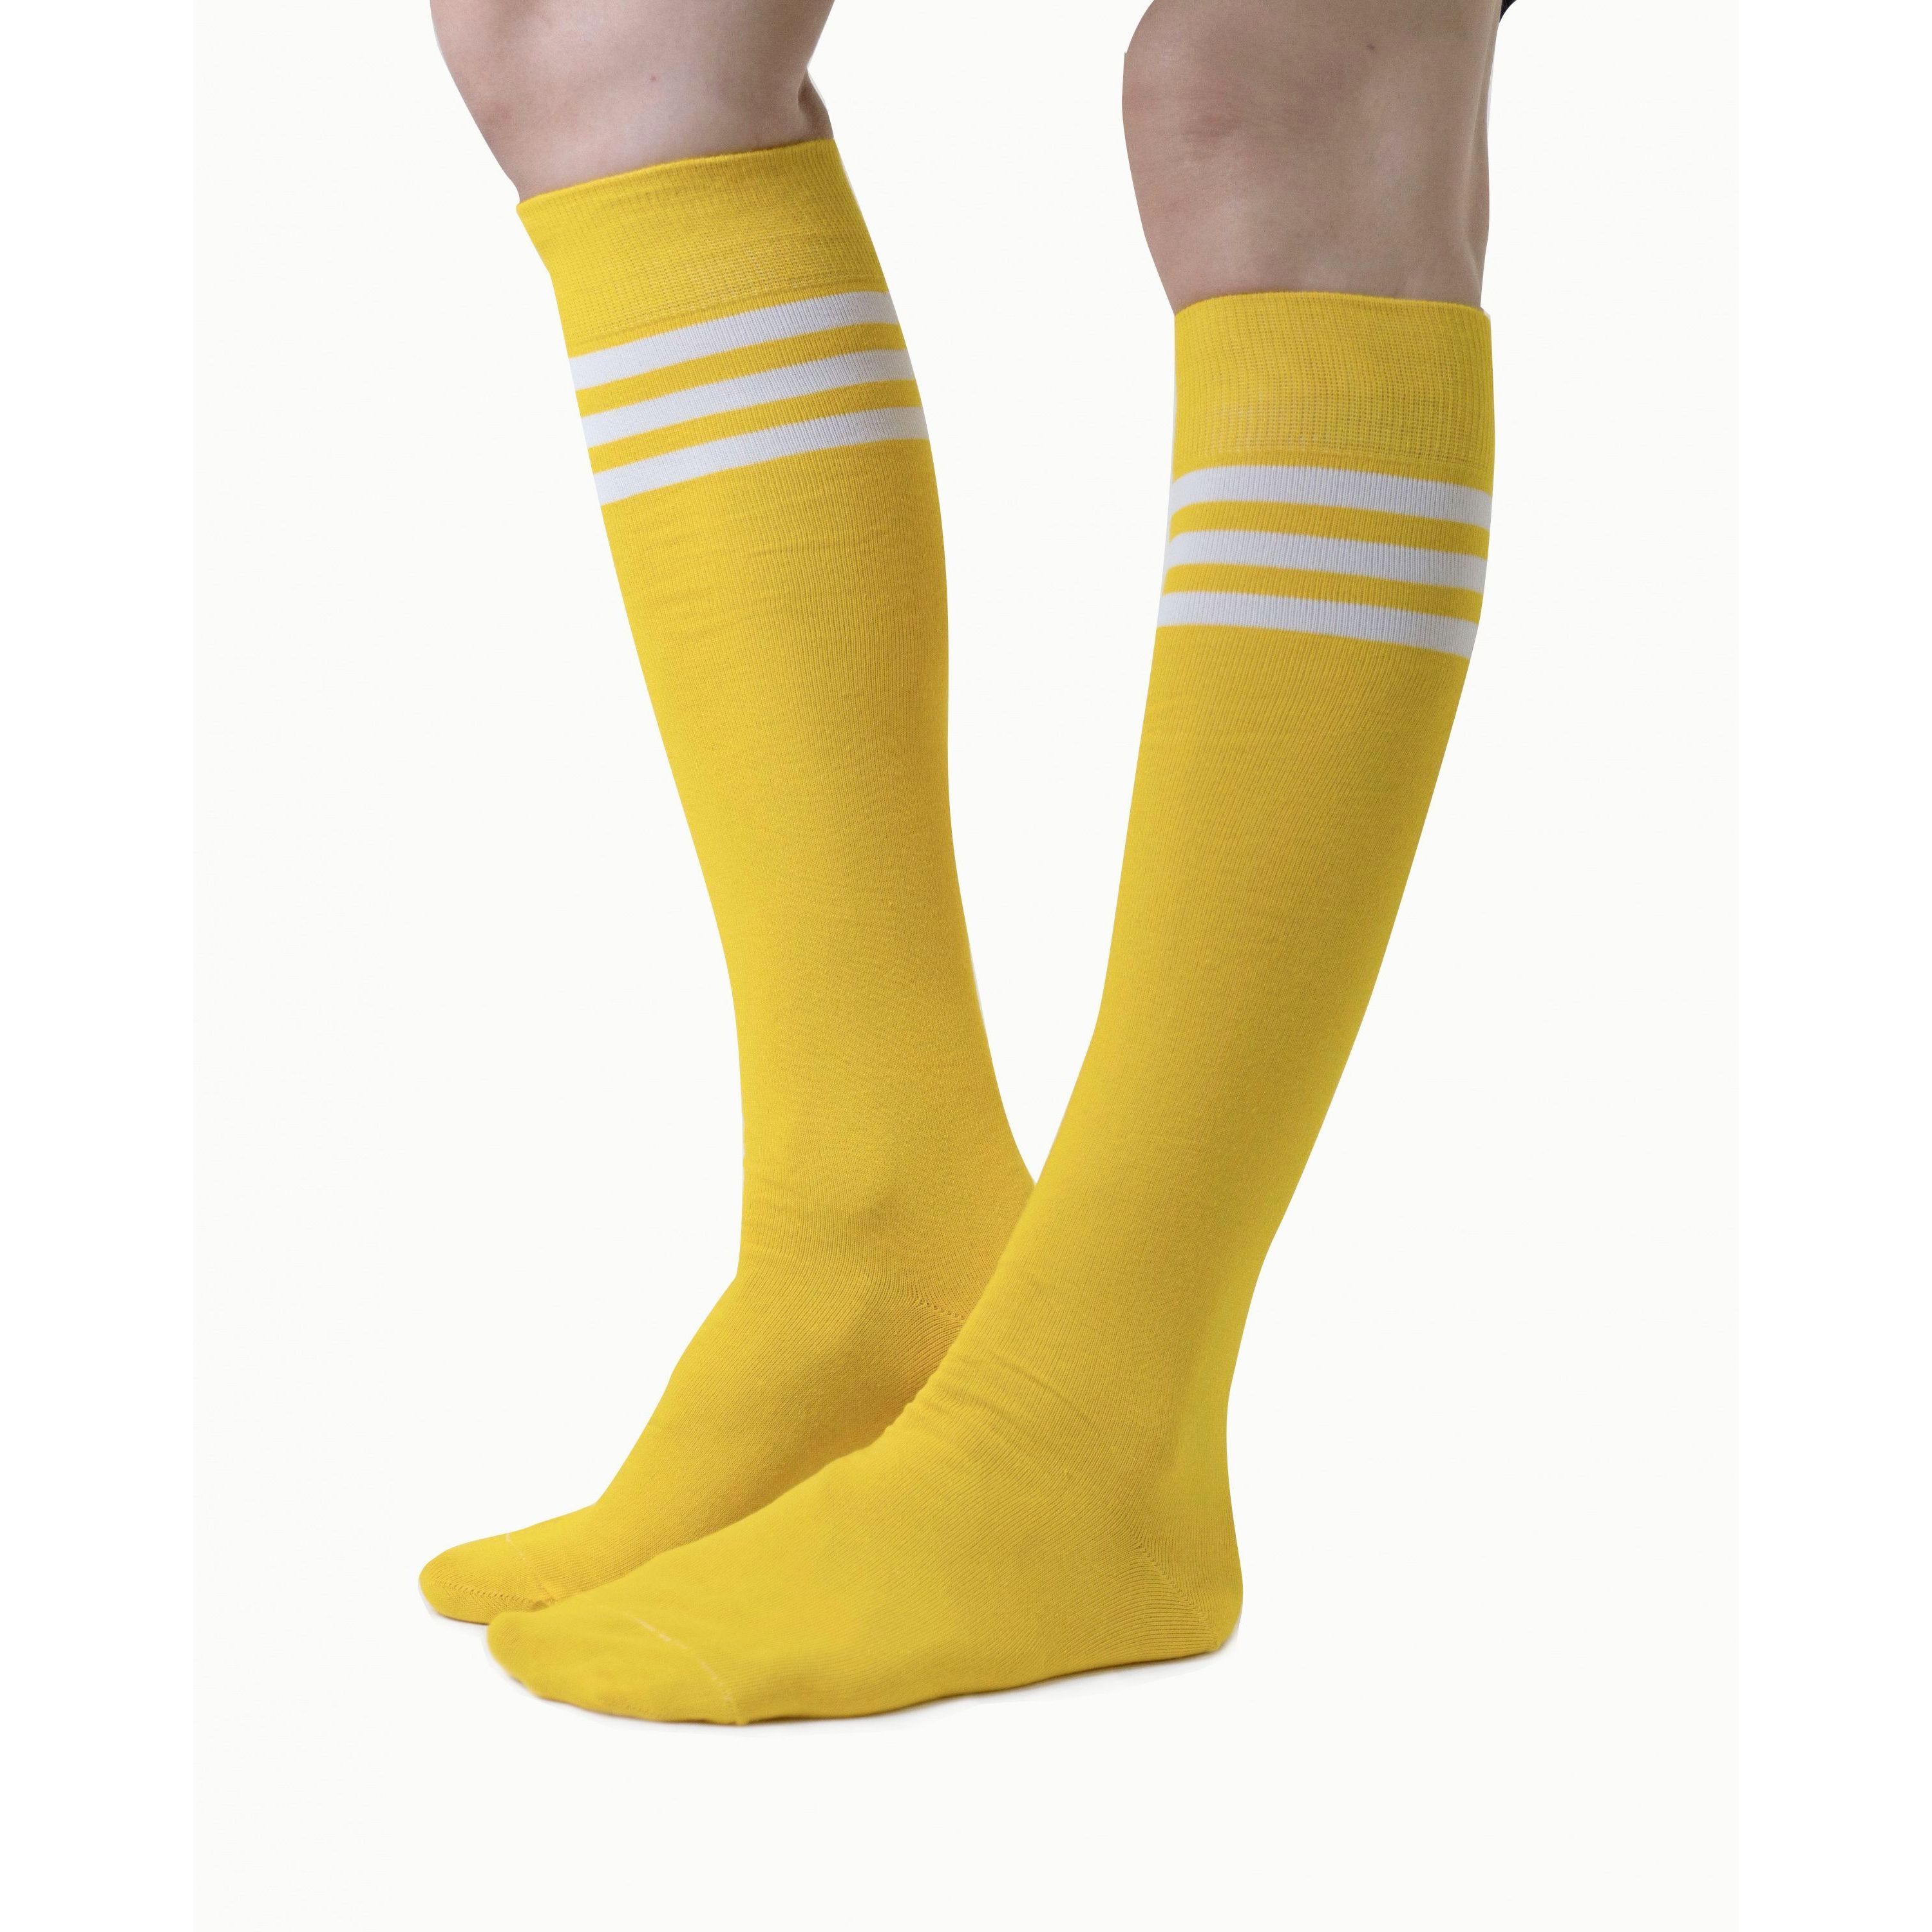 Гольфы мужские St. Friday Socks 431-8 желтые 38-41